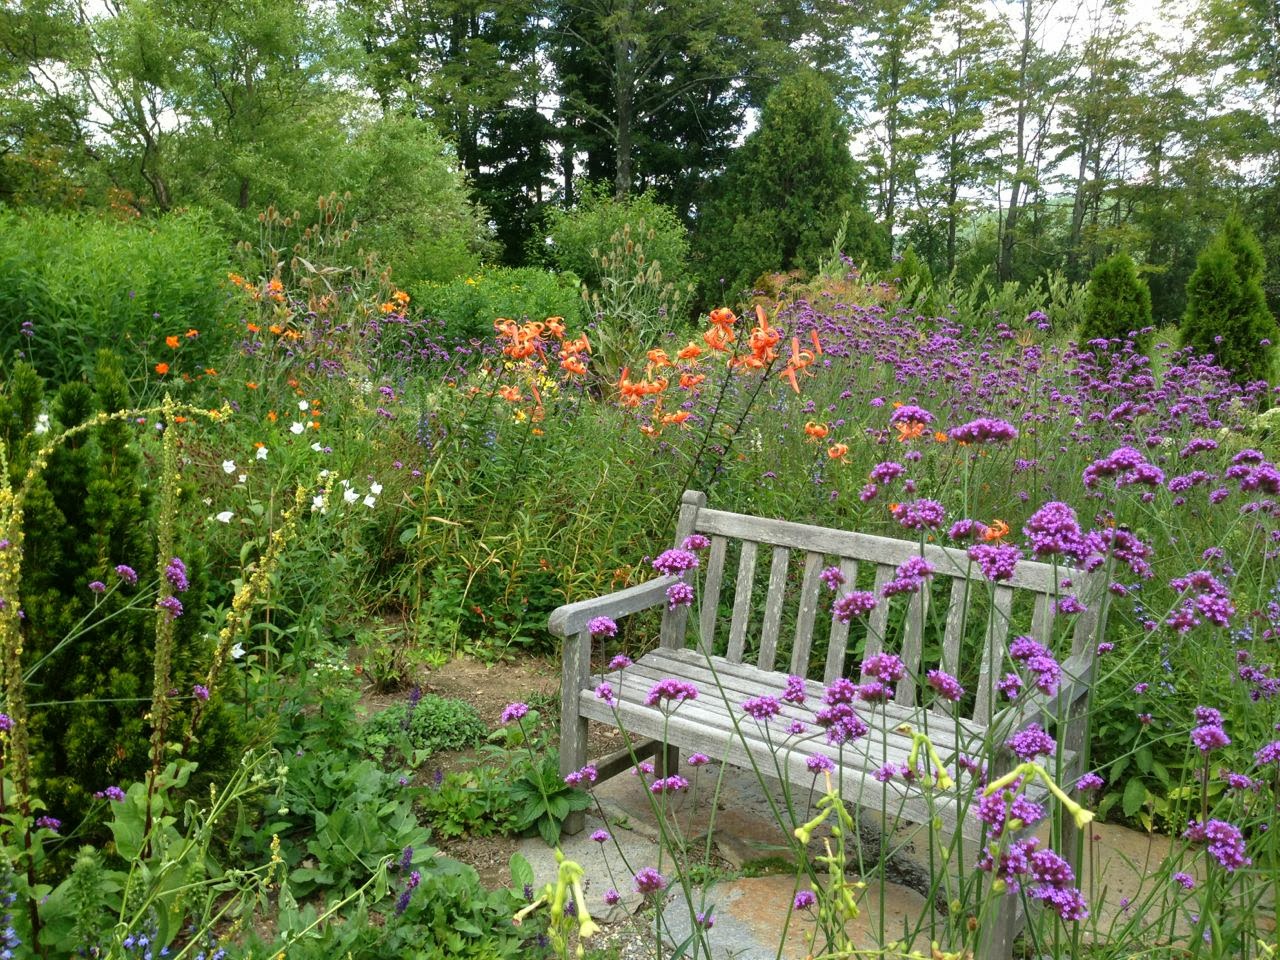 A Country Garden in Vermont